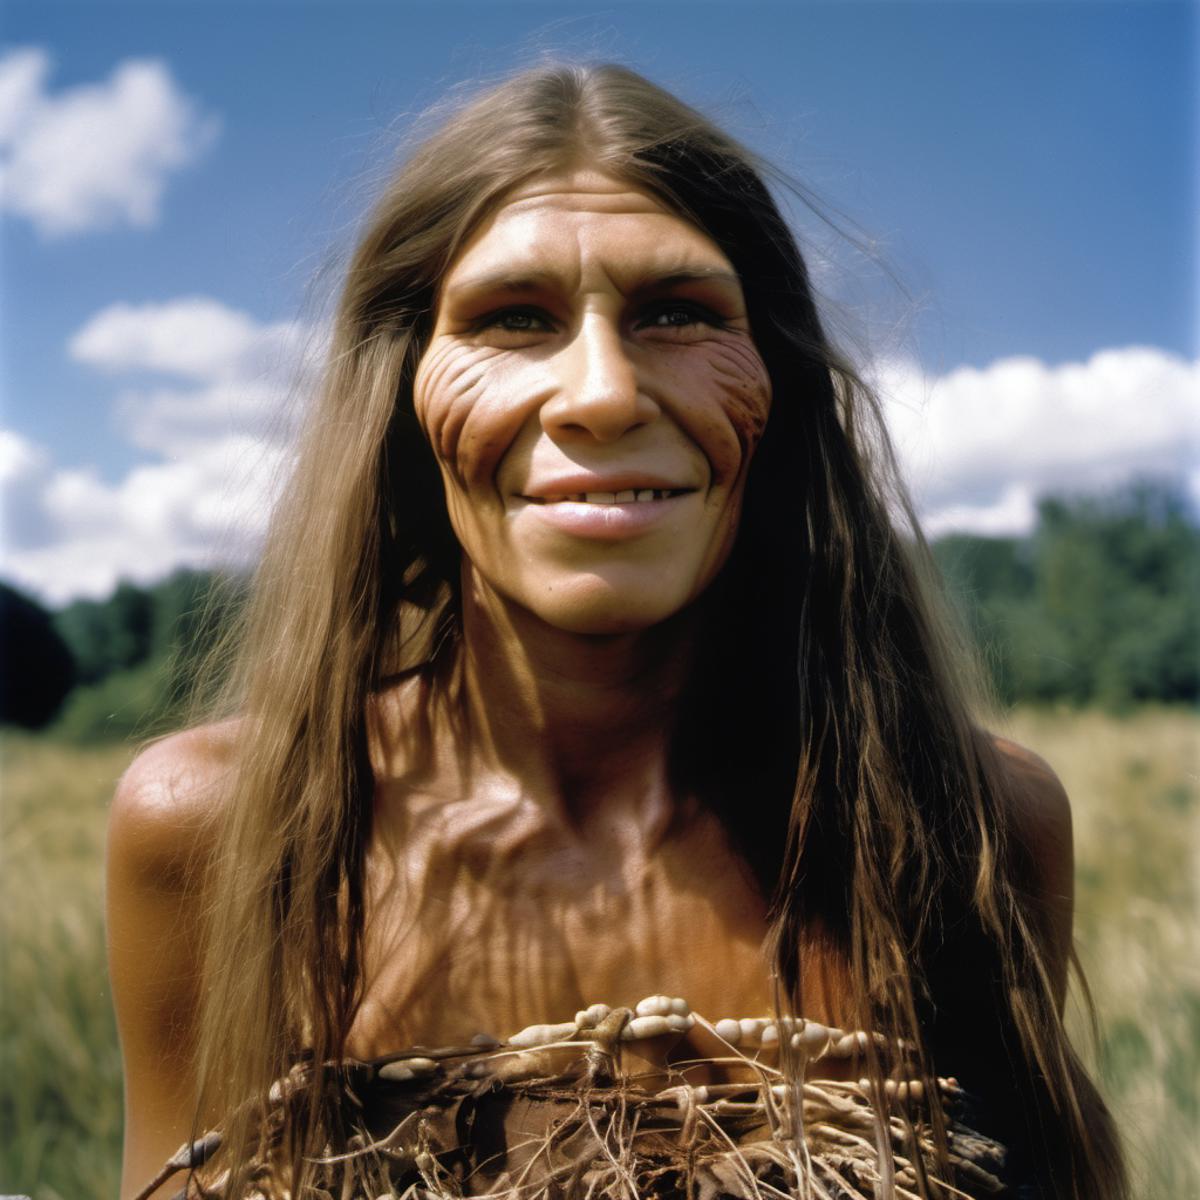 Neanderthal-Lora image by cristianchirita749